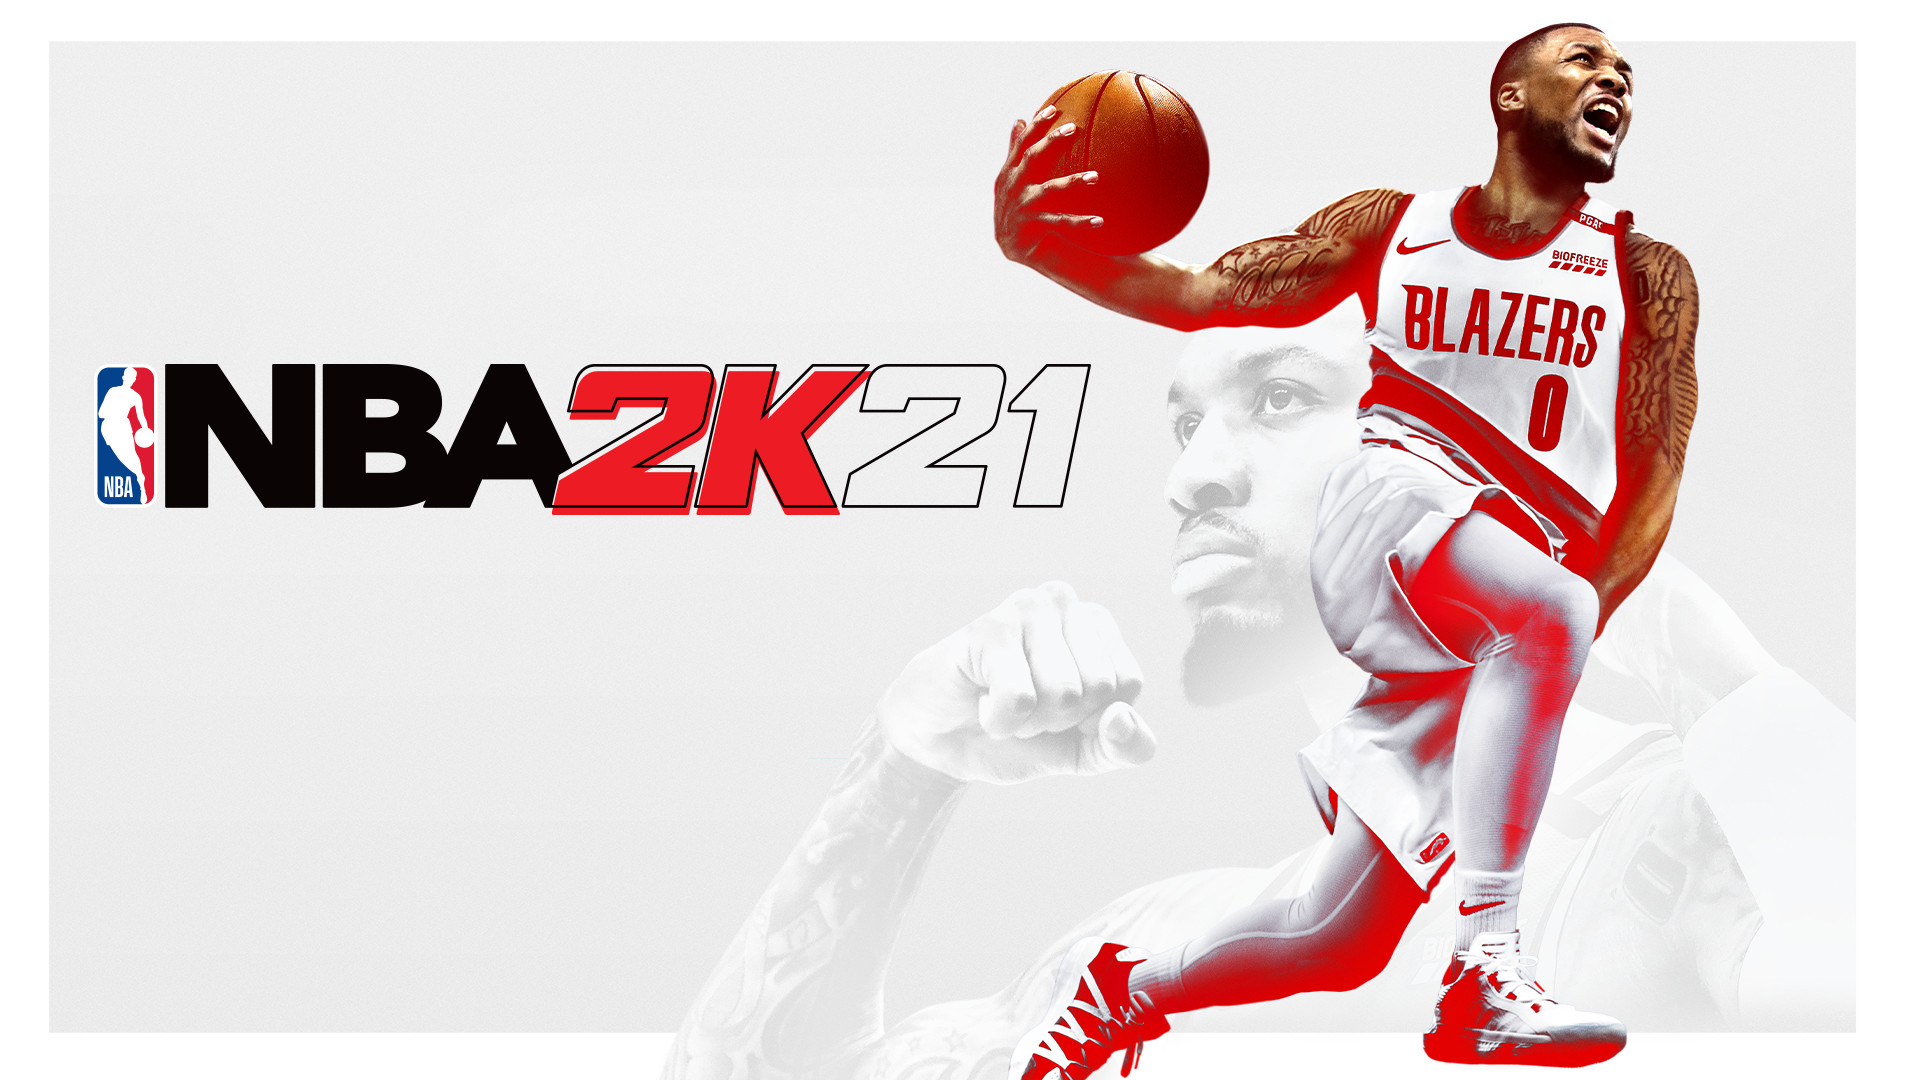 《NBA 2K21》Steam预购开启 标准版售价199元